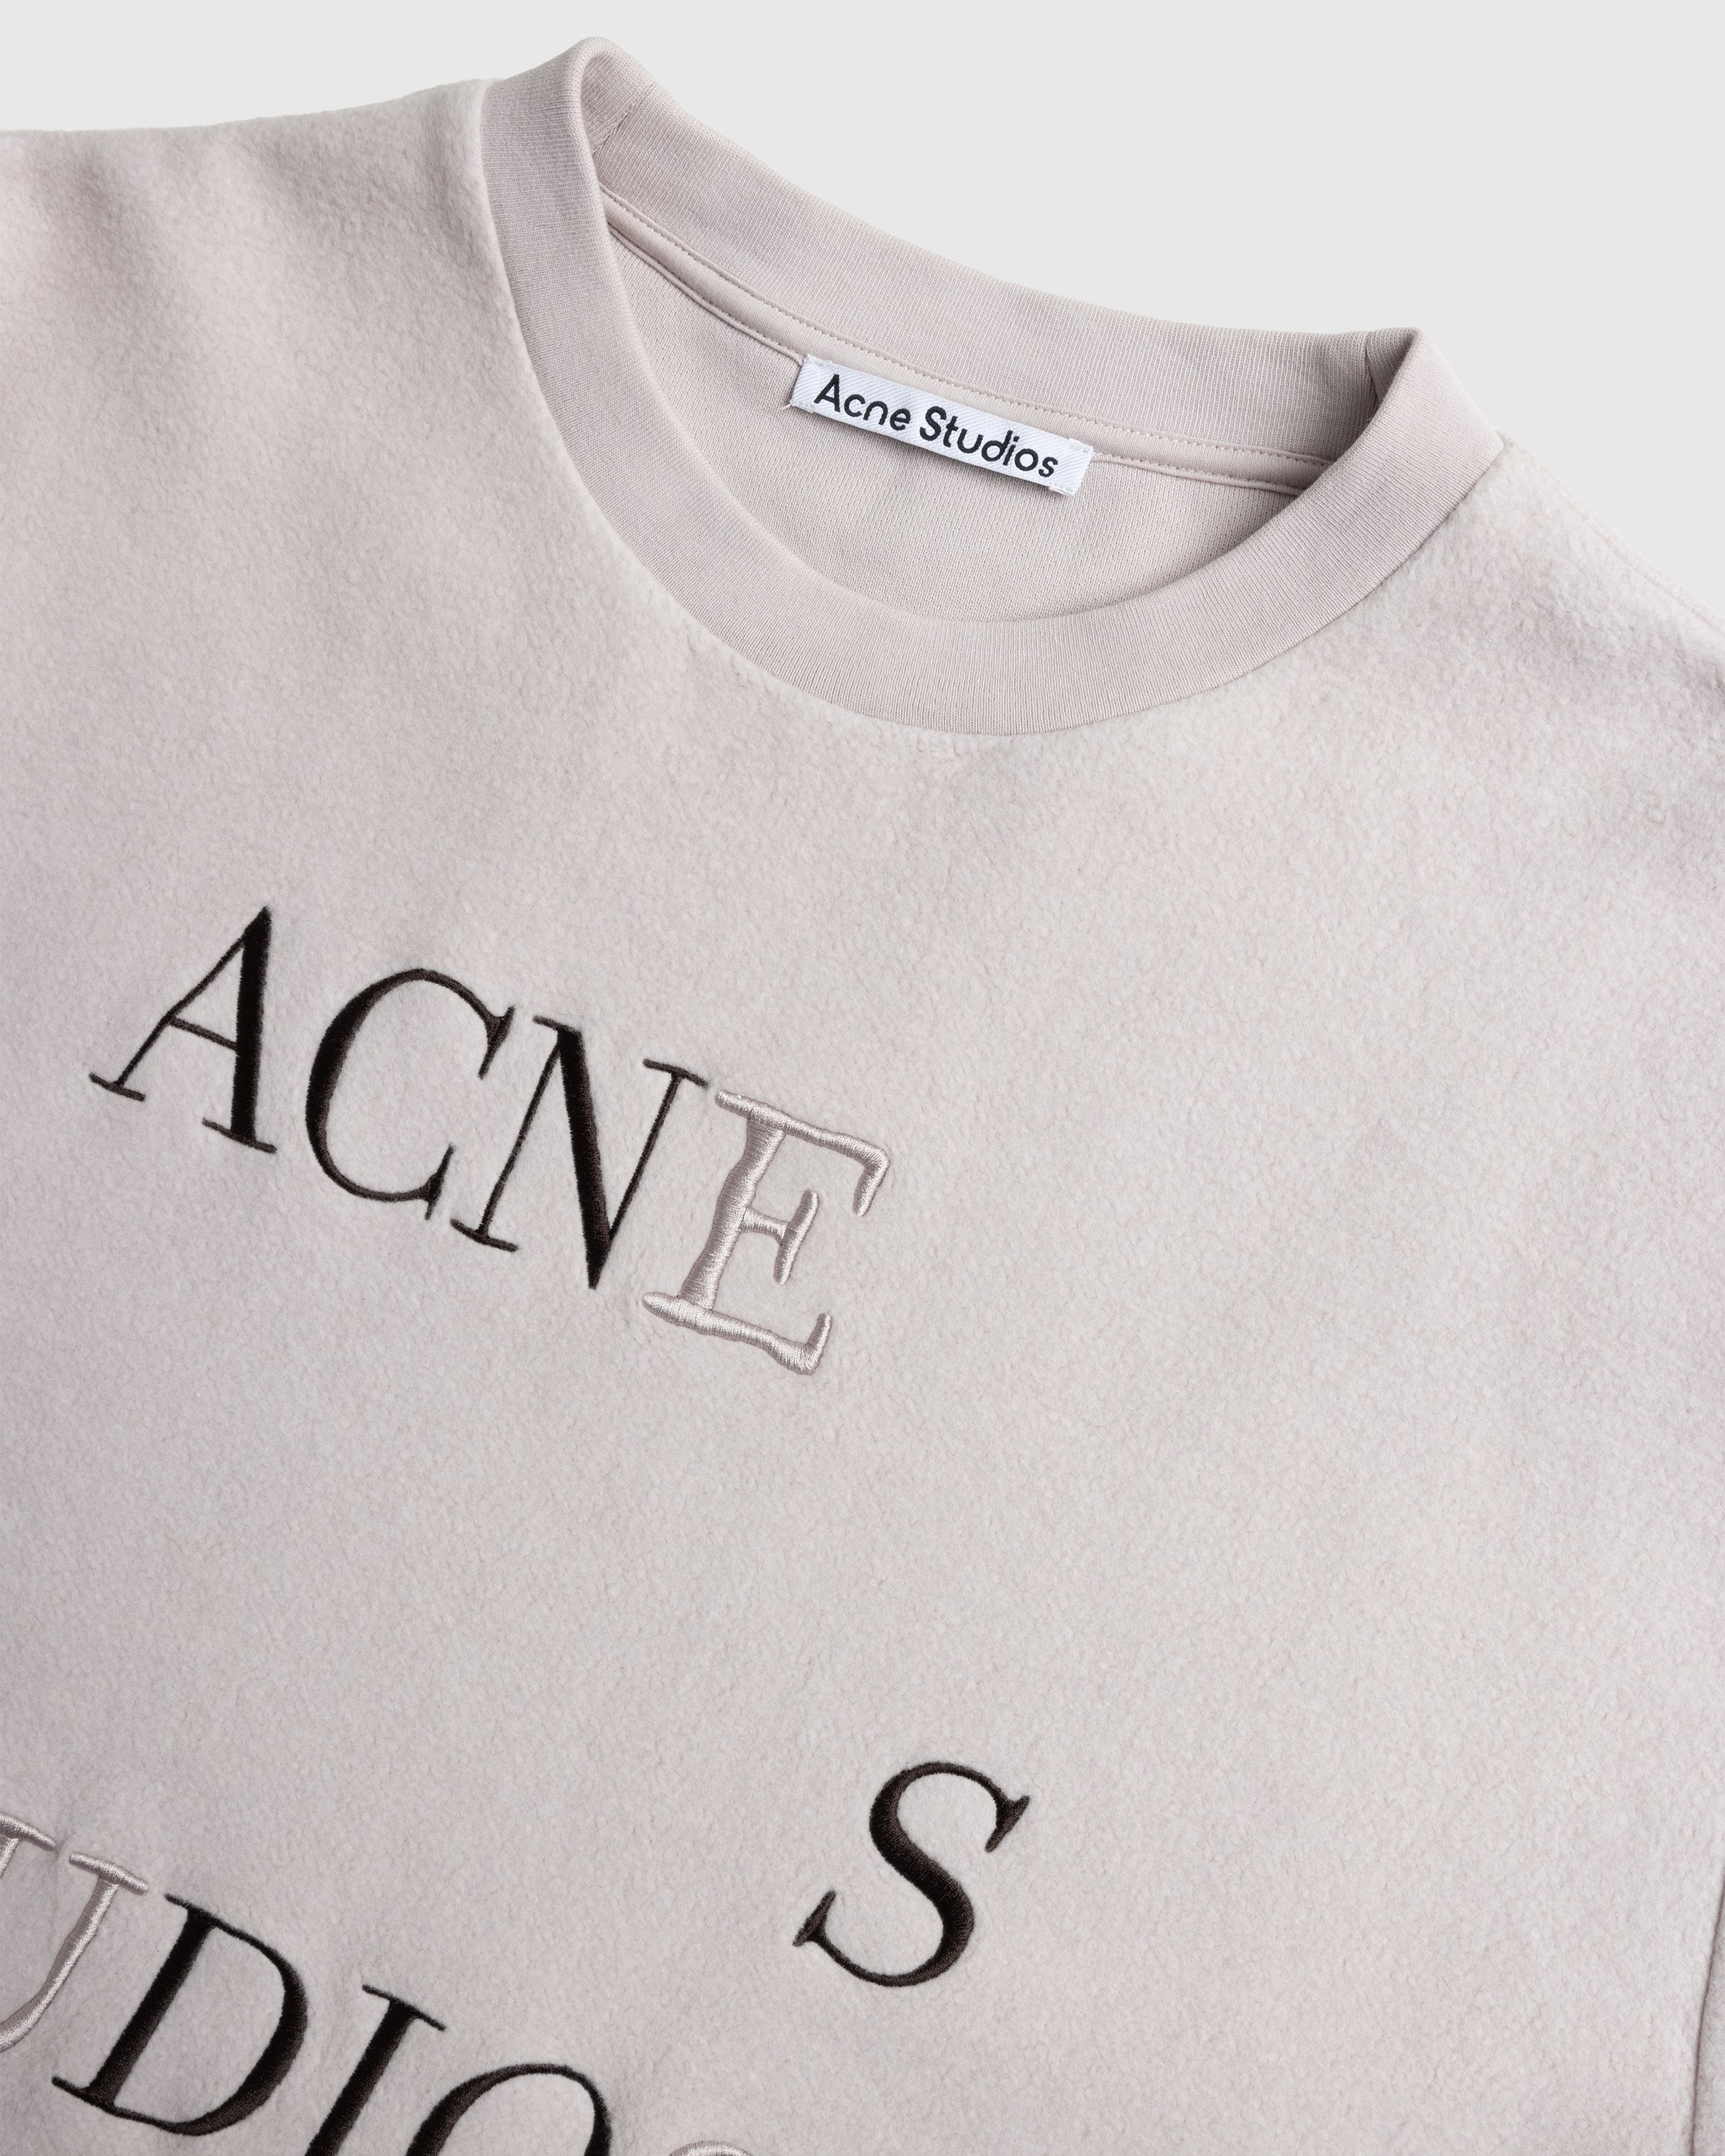 Acne Studios - Logo T-Shirt Beige - Clothing - Beige - Image 6